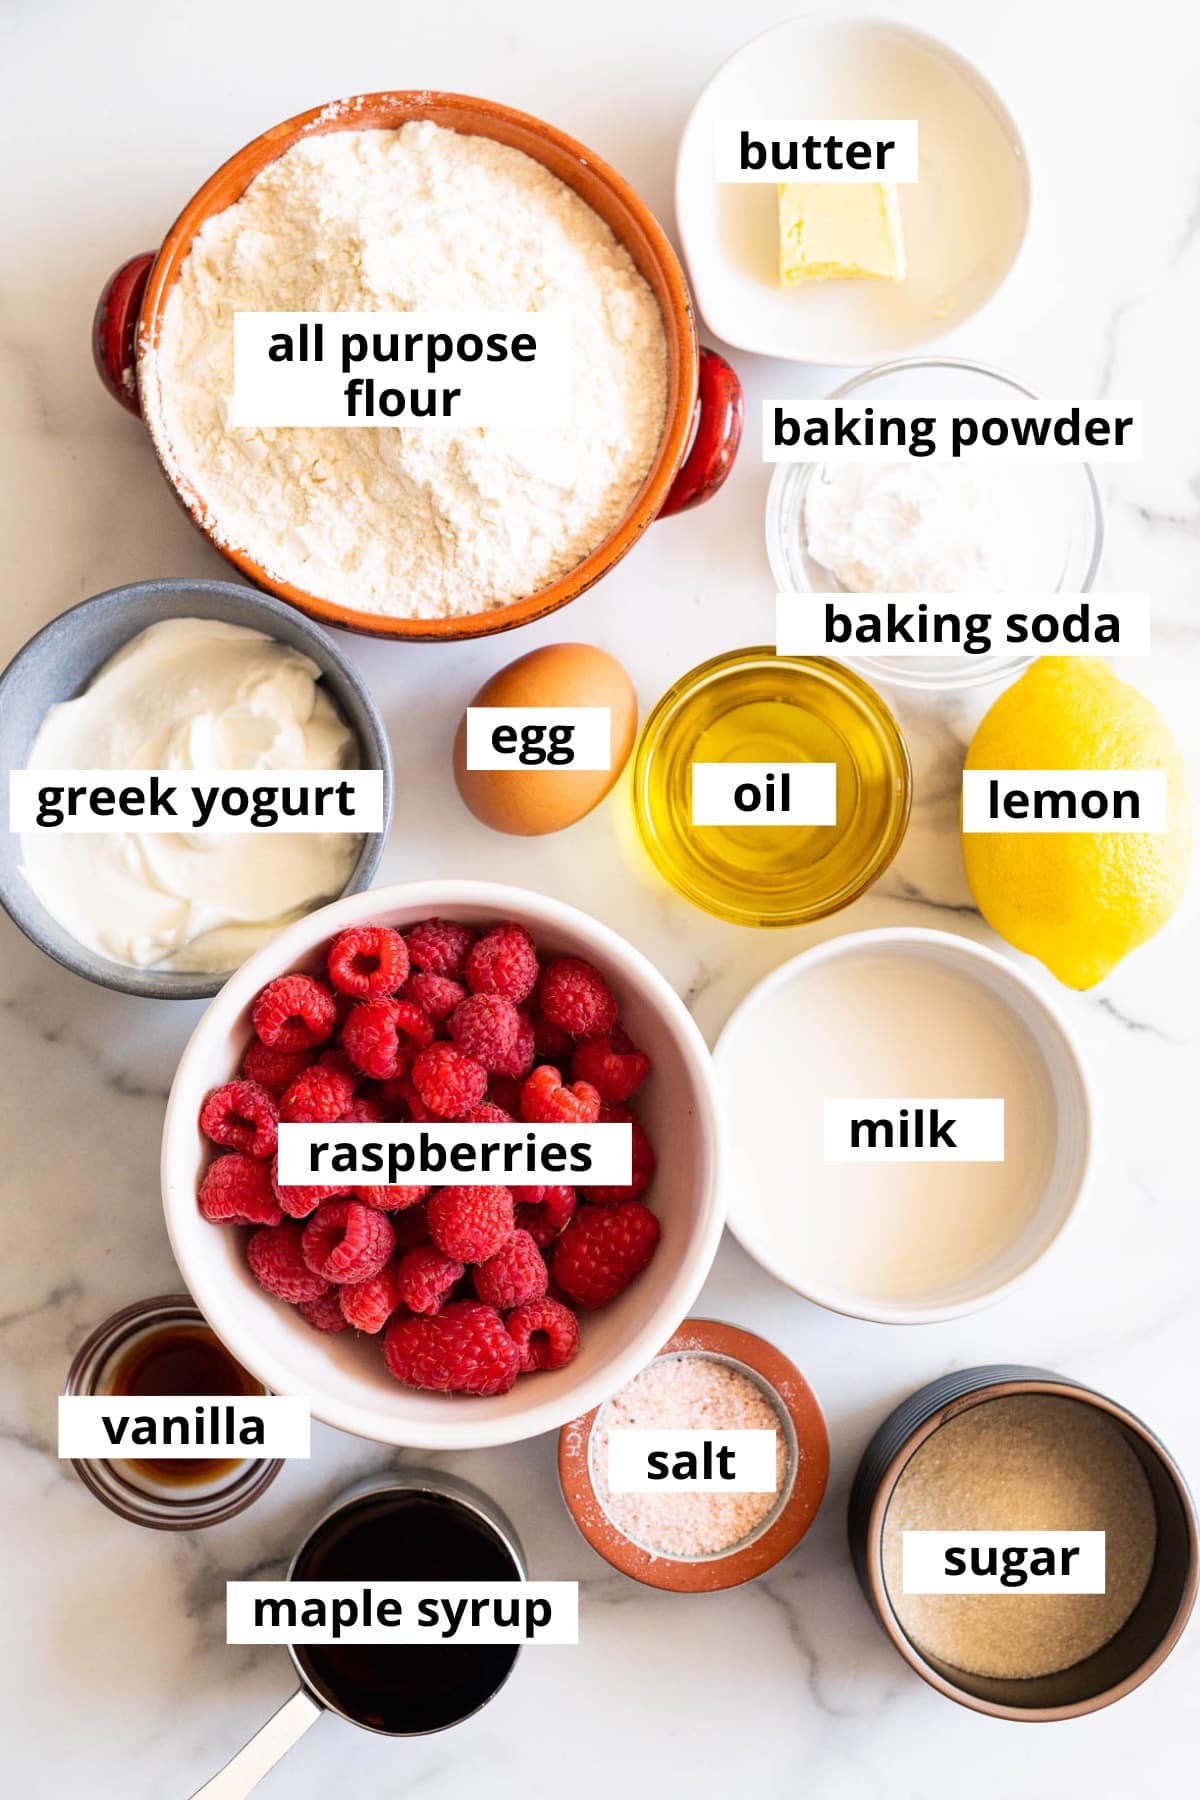 All purpose flour, butter, baking powder, baking soda, lemon, oil, egg, Greek yogurt, raspberries, milk, sugar, vanilla, maple syrup and salt.